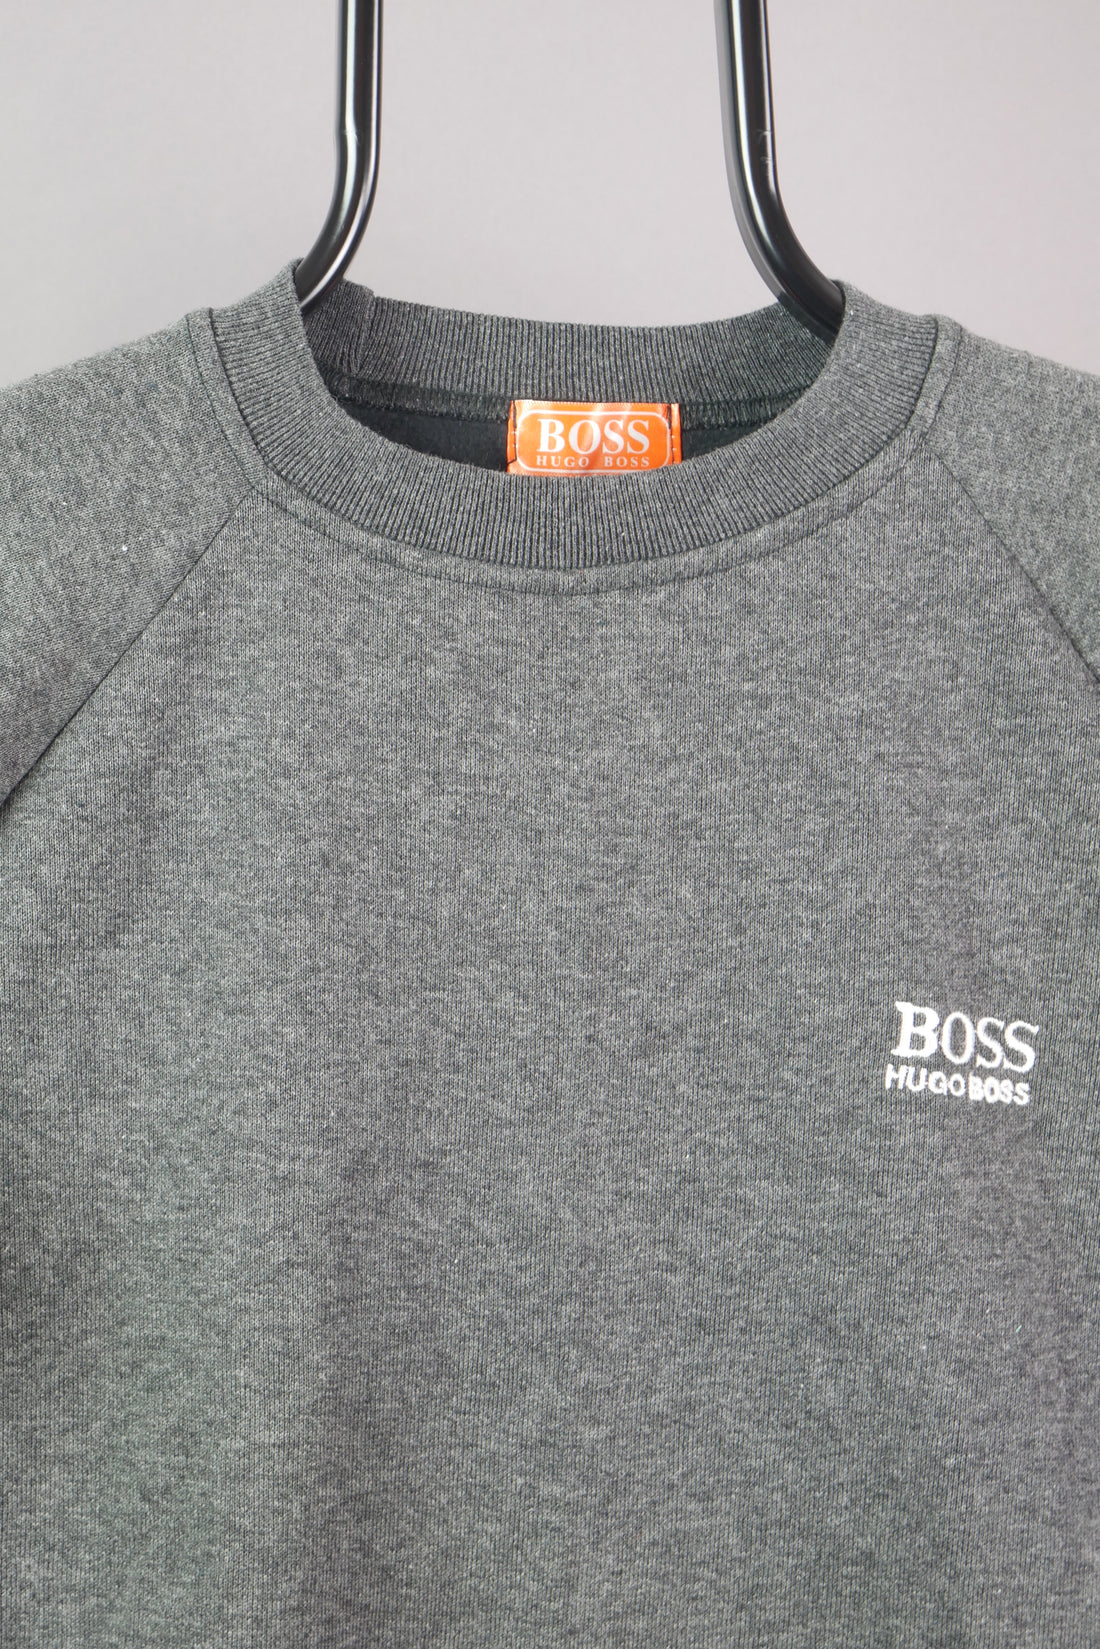 The Bootleg Hugo Boss Raglan Sleeve T-Shirt (M)